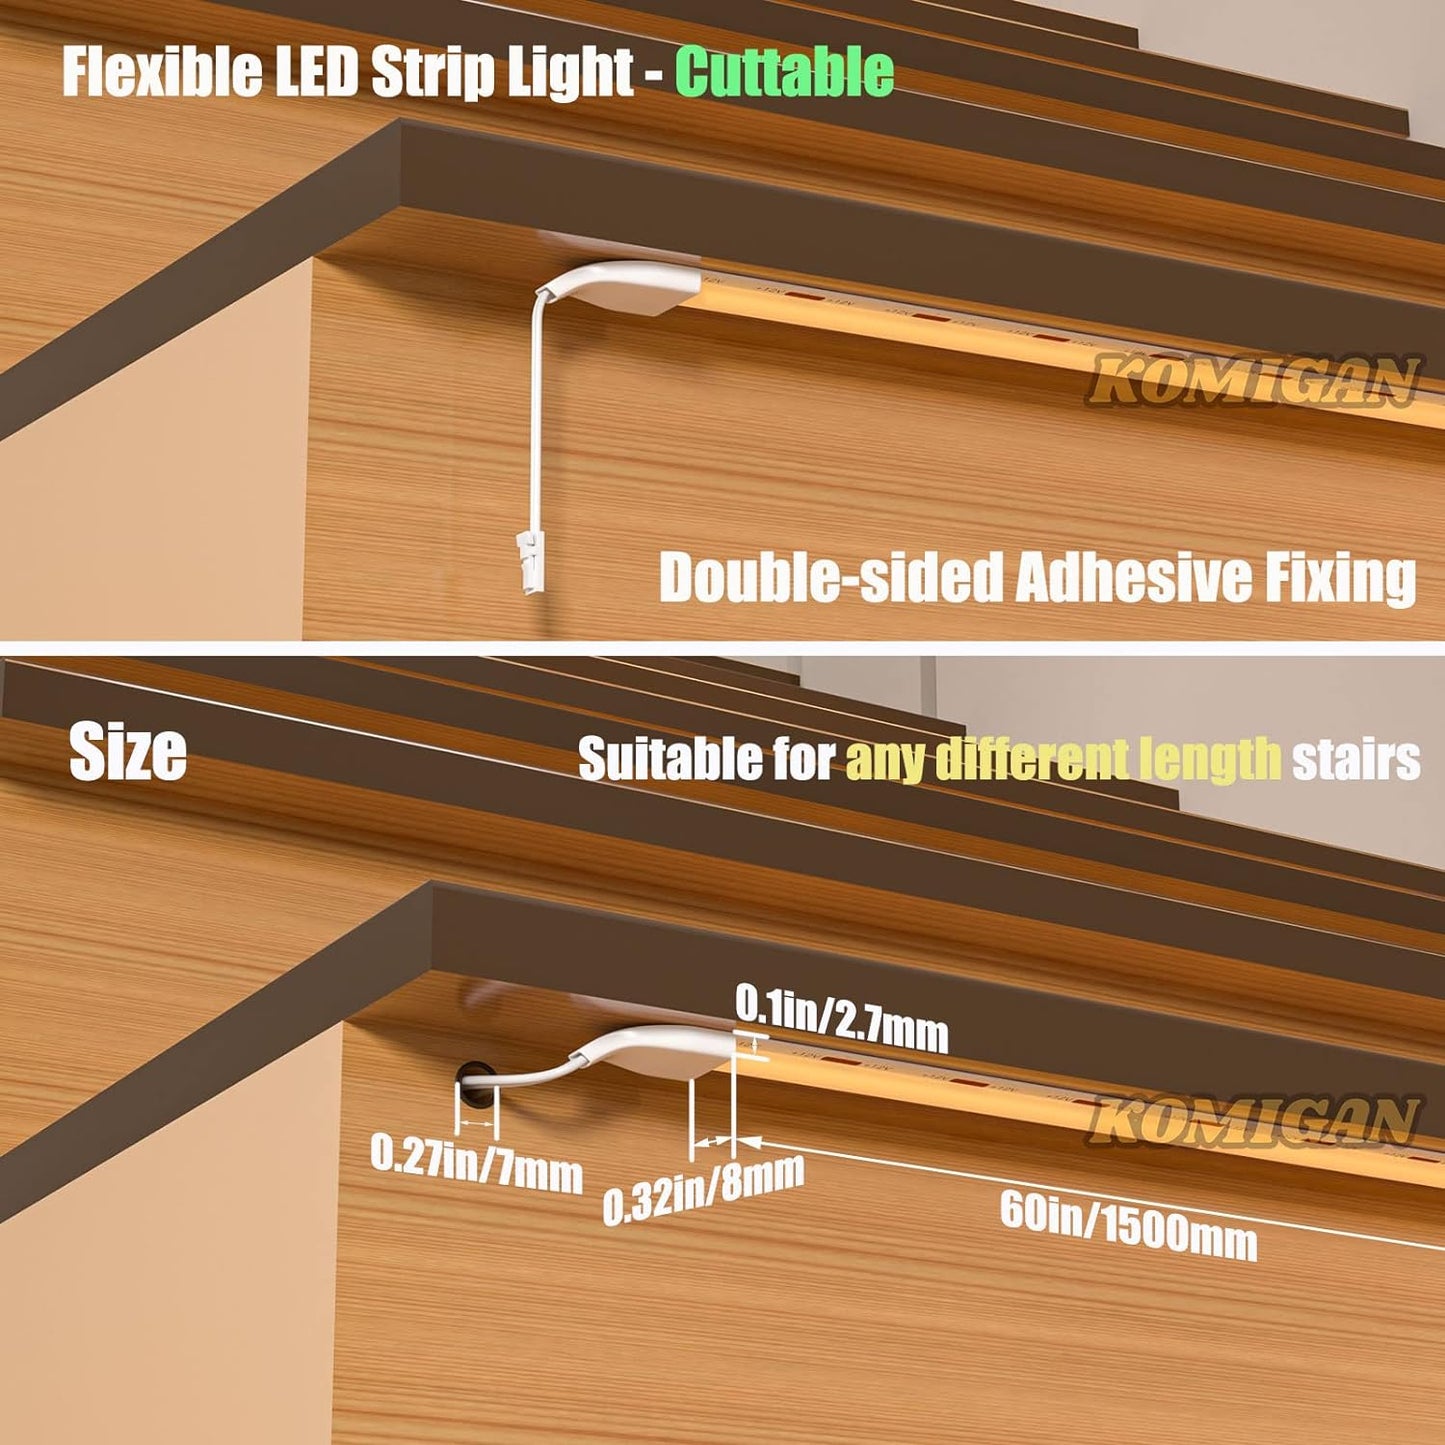 KOMIGAN Intelligent Motion Sensor LED Stair Lighting Kit KMG-3233, 60 Inch (150 cm) Long Cuttable LED Strip Light for Indoor LED Stair Lights LED Step Lights (20 Stairs, Cool White 6000K) (20 Stairs, C